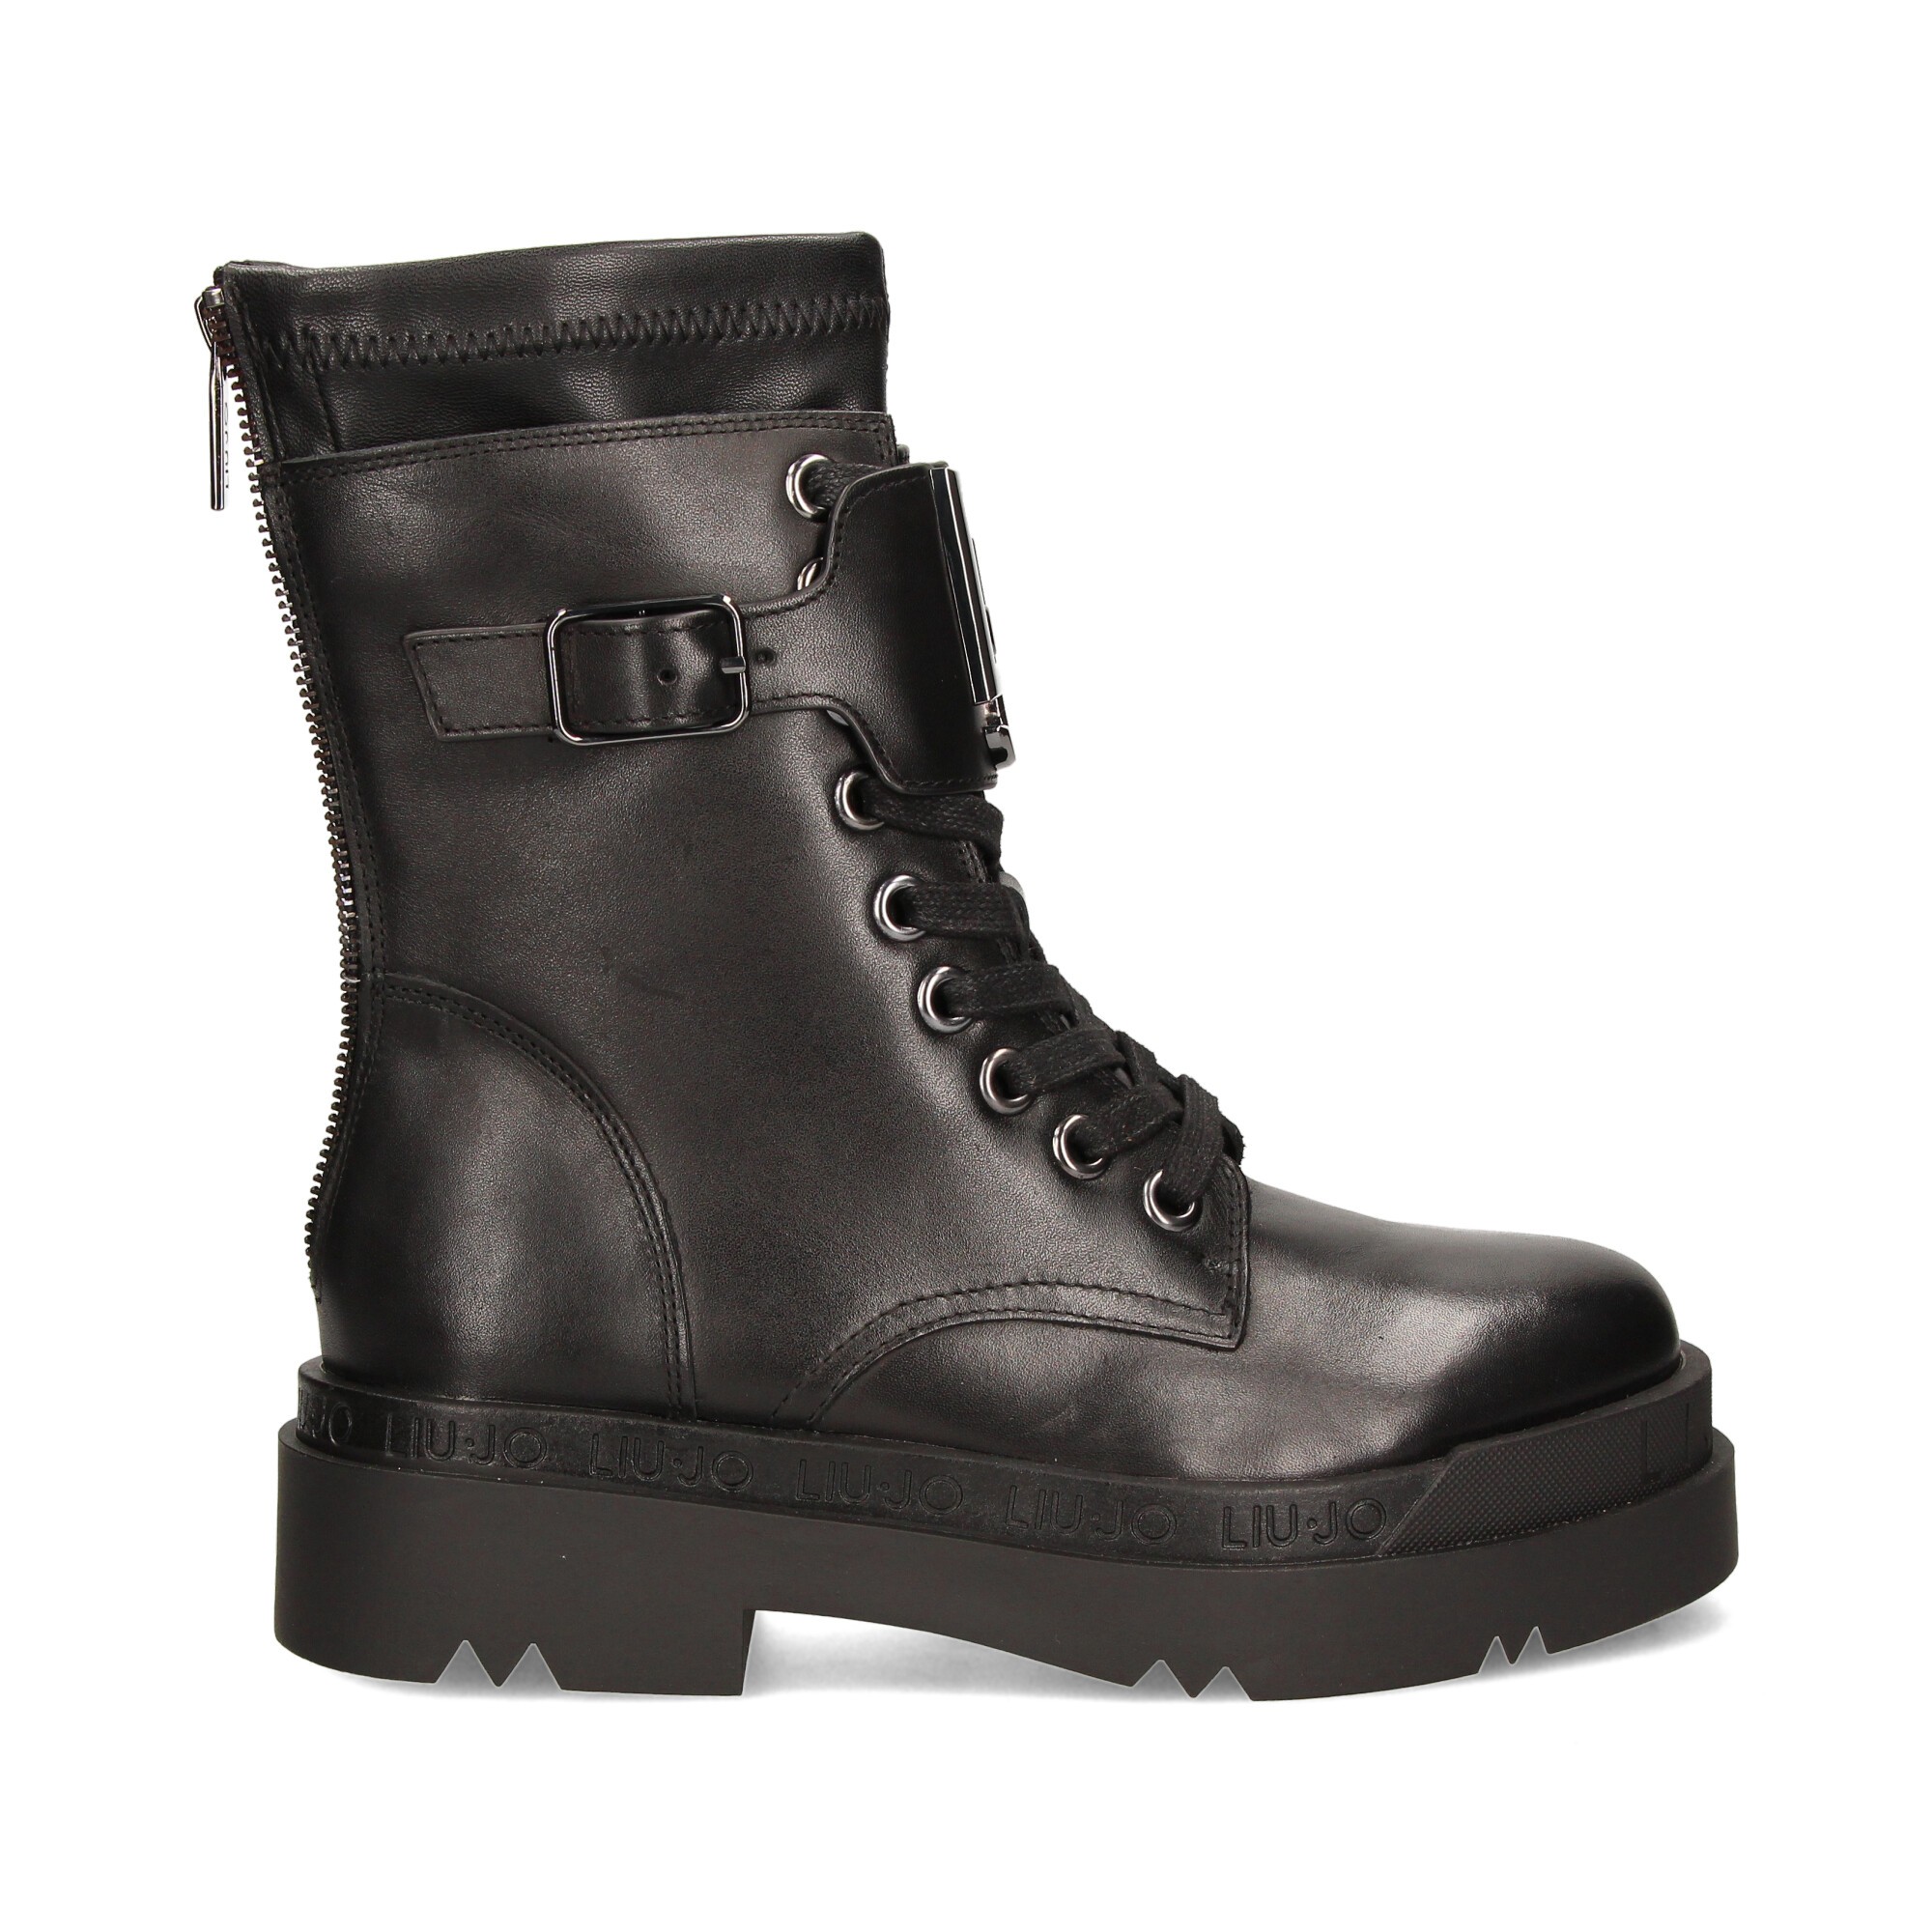 military-boot-black-leather-pocket-lj